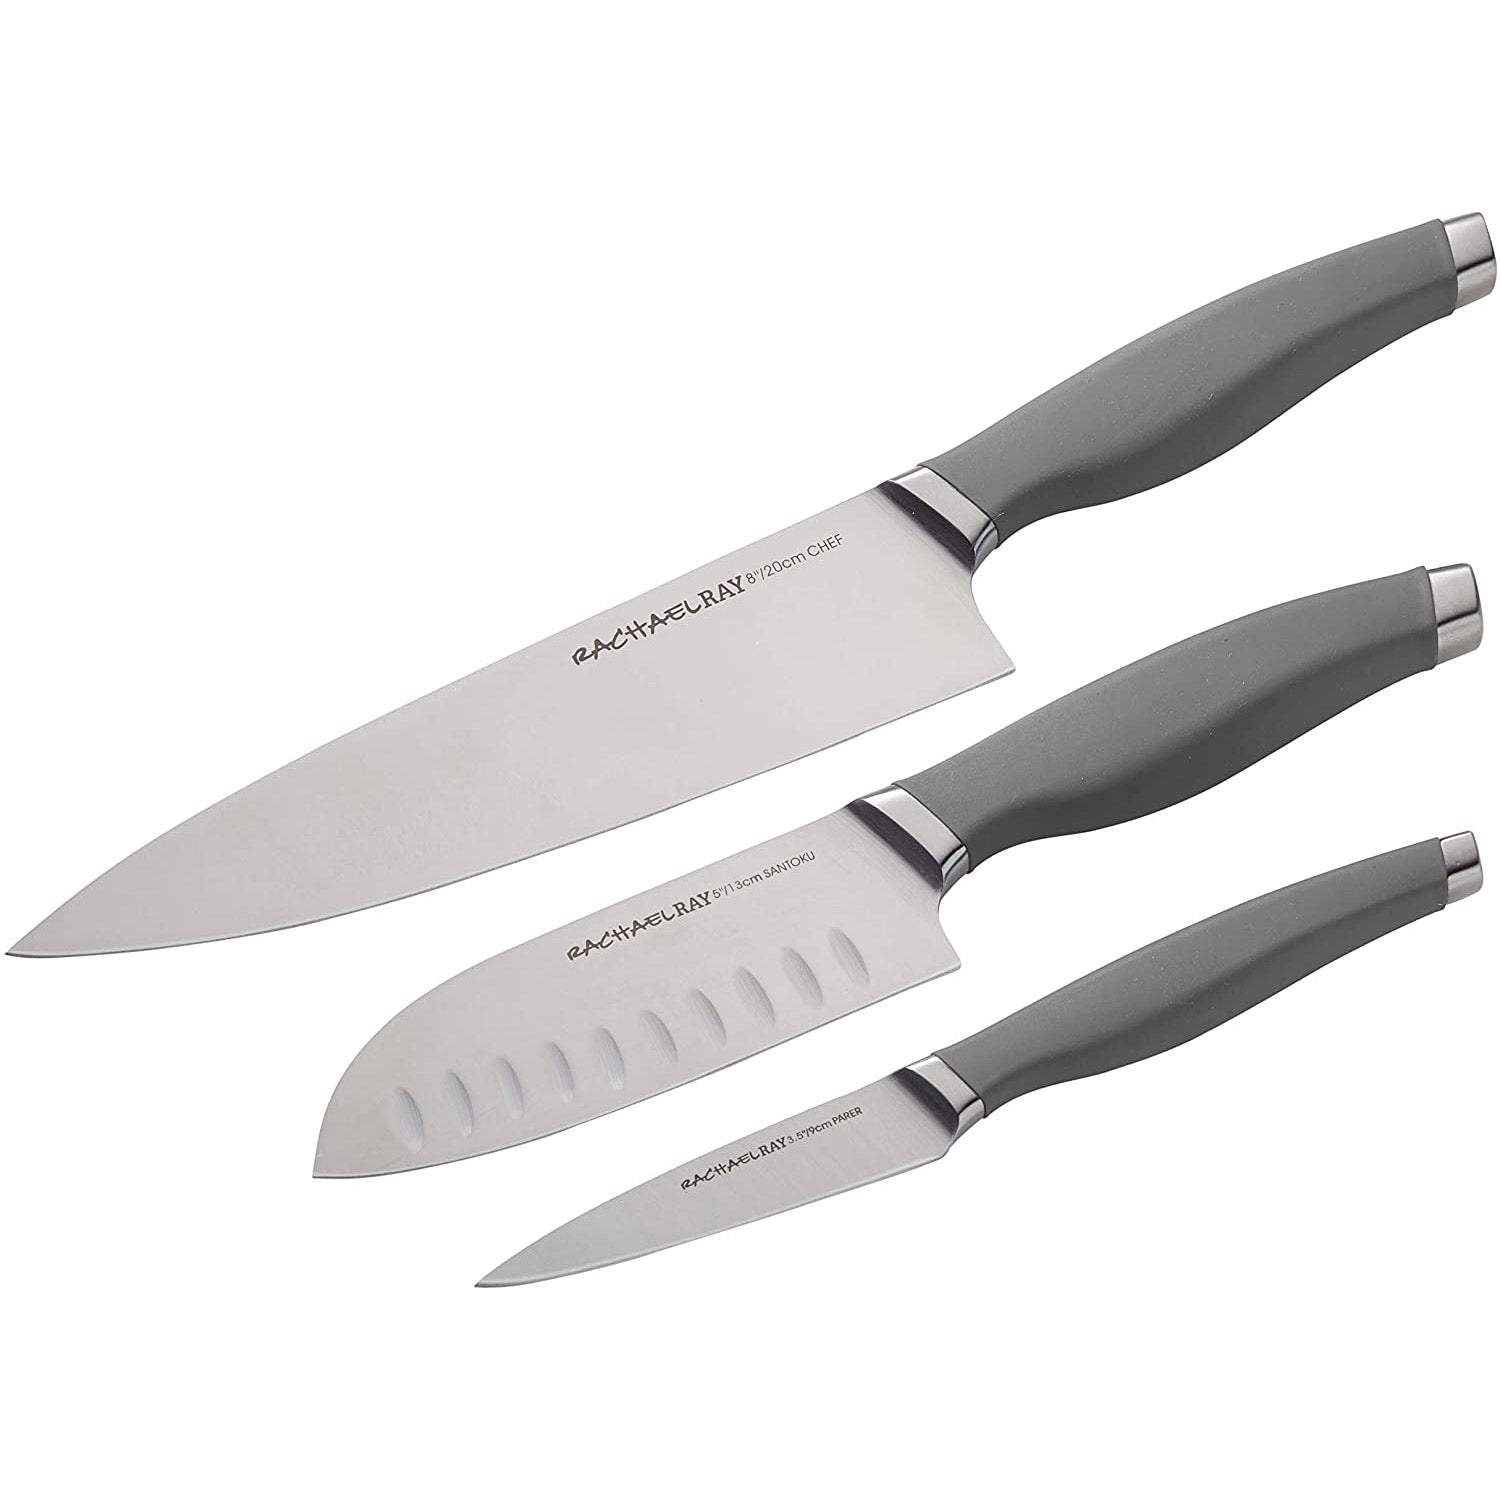 Blade Sharp Kitchen Kitchen Knife Set Stainless Steel Chef Knives Cutlery  Sheath